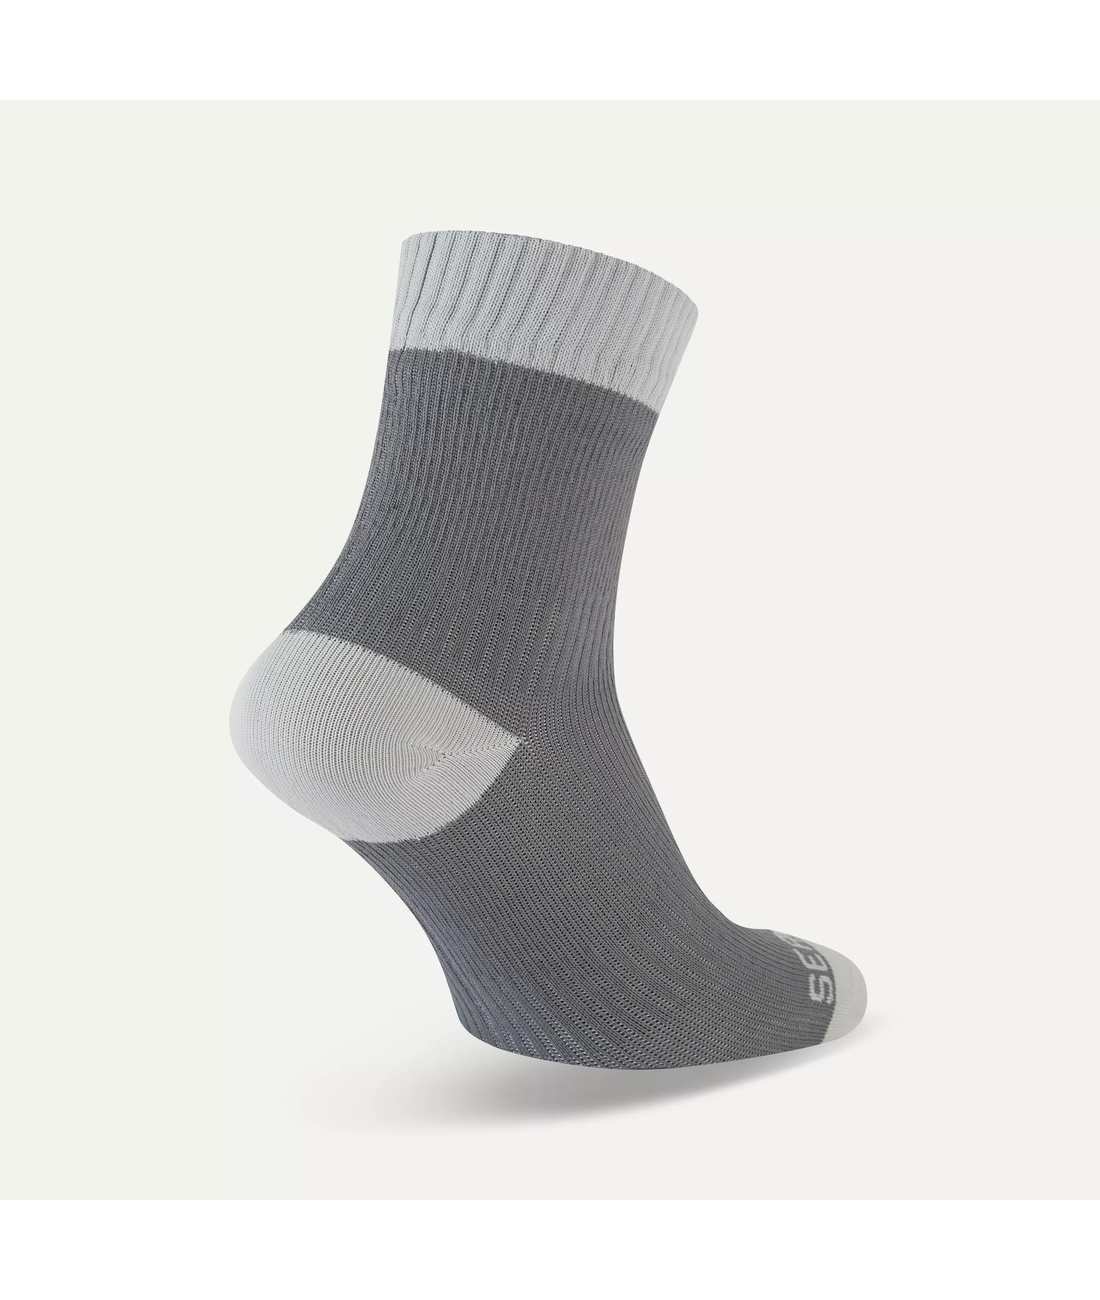 Wretham - Waterproof Warm Weather Ankle Length Sock